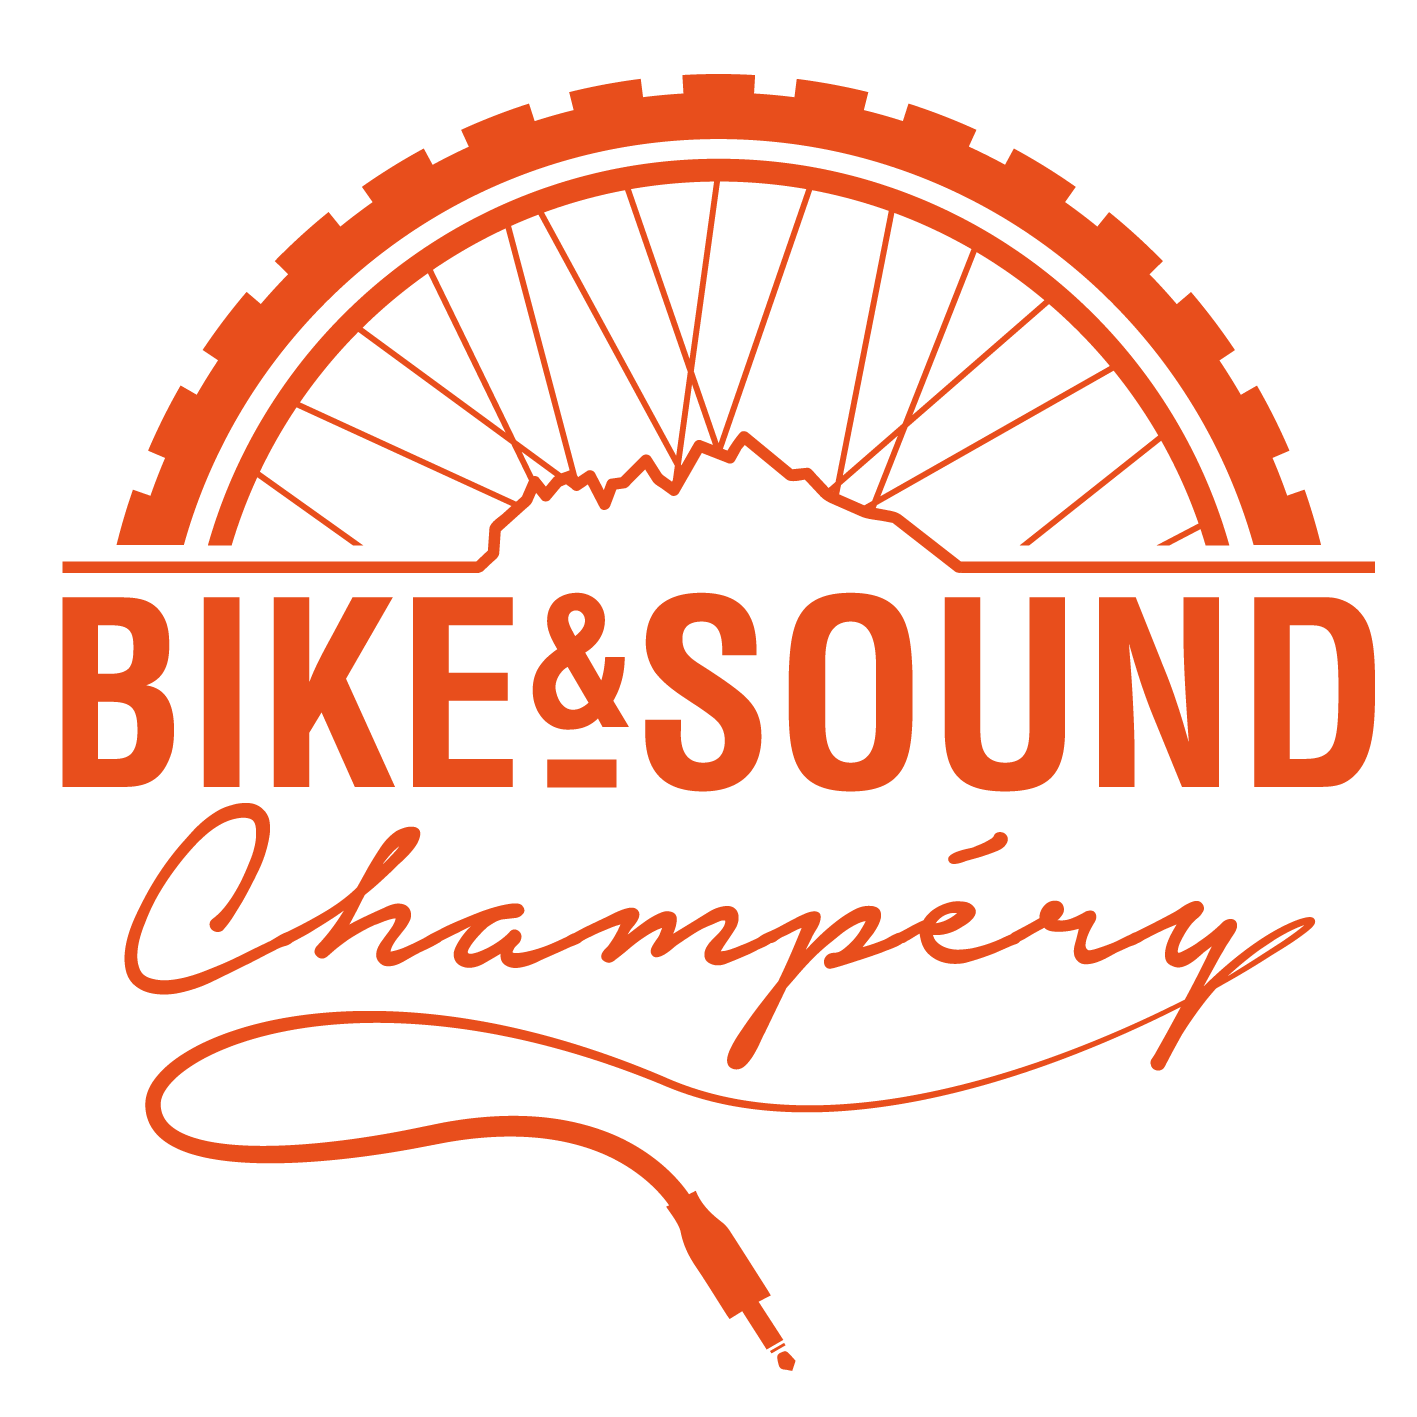 Bike And Sound Festival